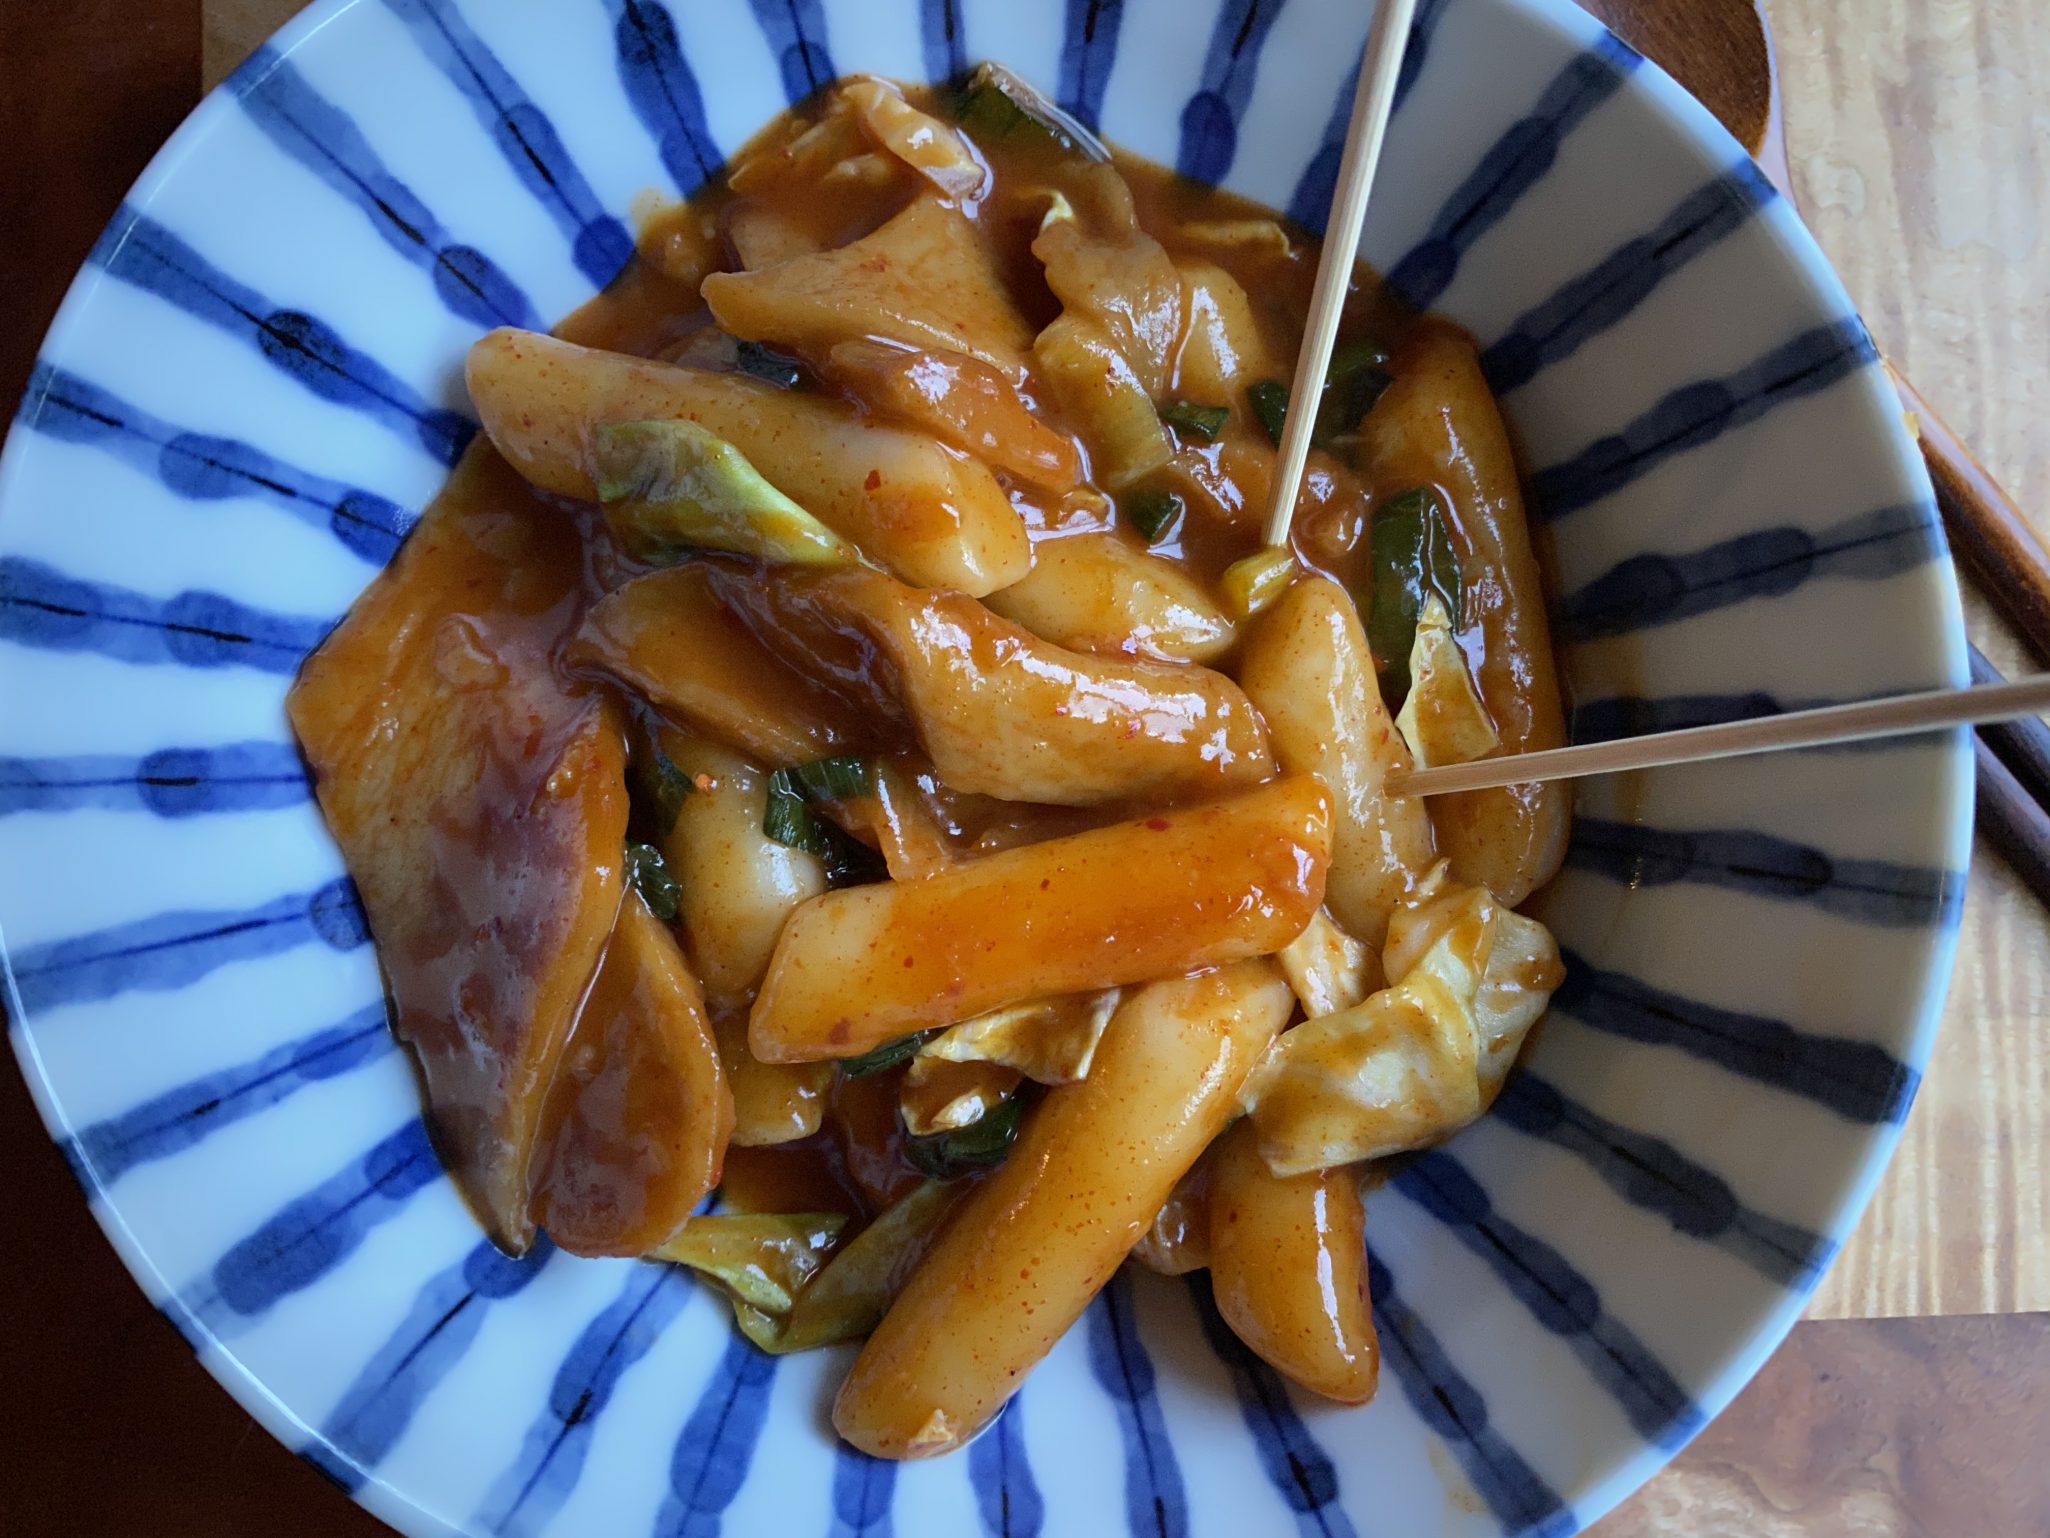 How to make Korean Rice on Stovetop - Kimchimari